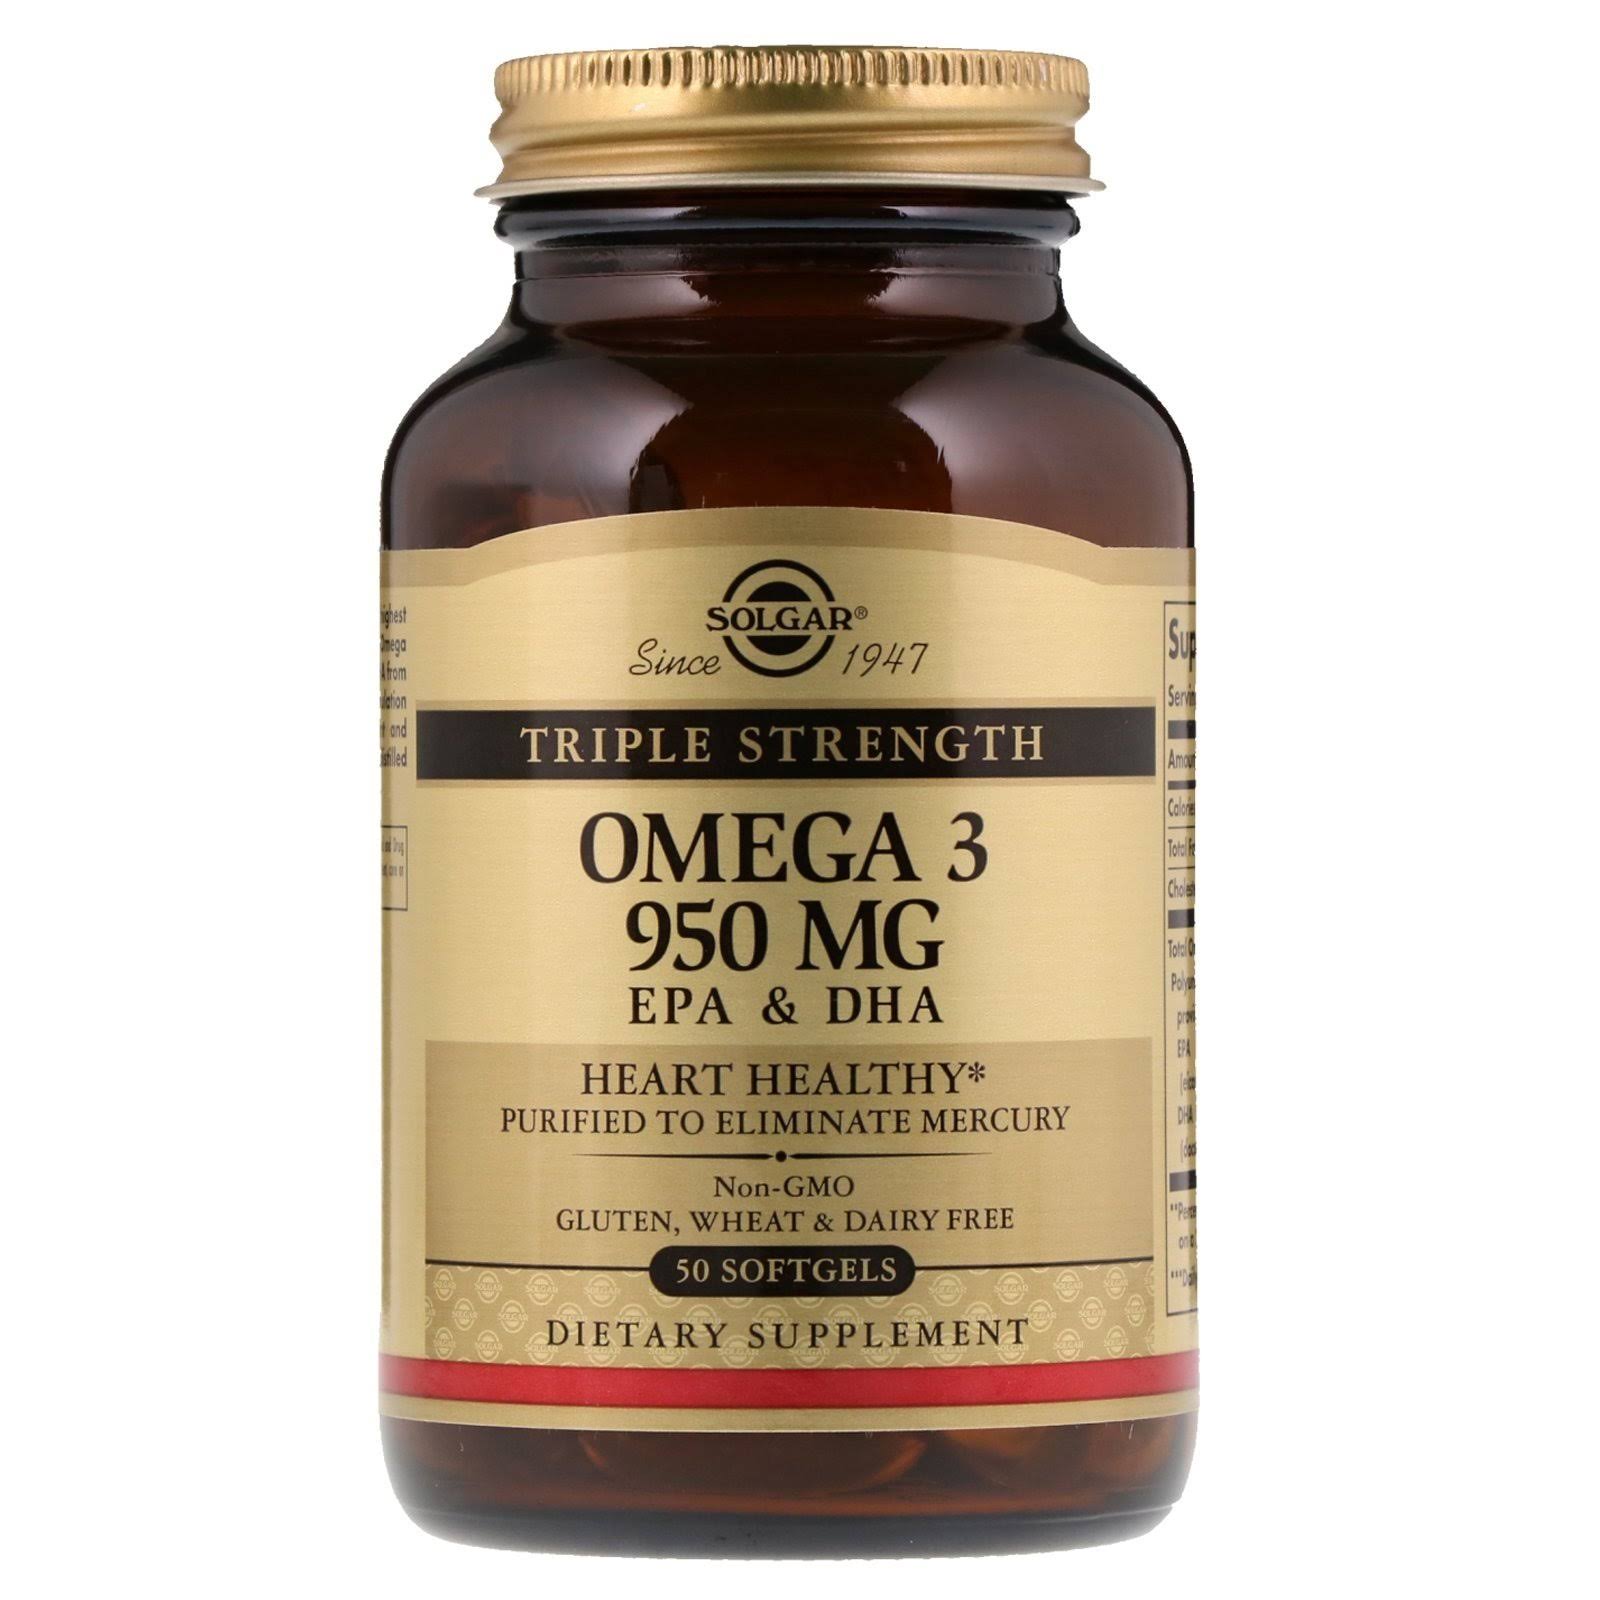 Solgar Omega 3 Dietary Supplement - 50 Softgels